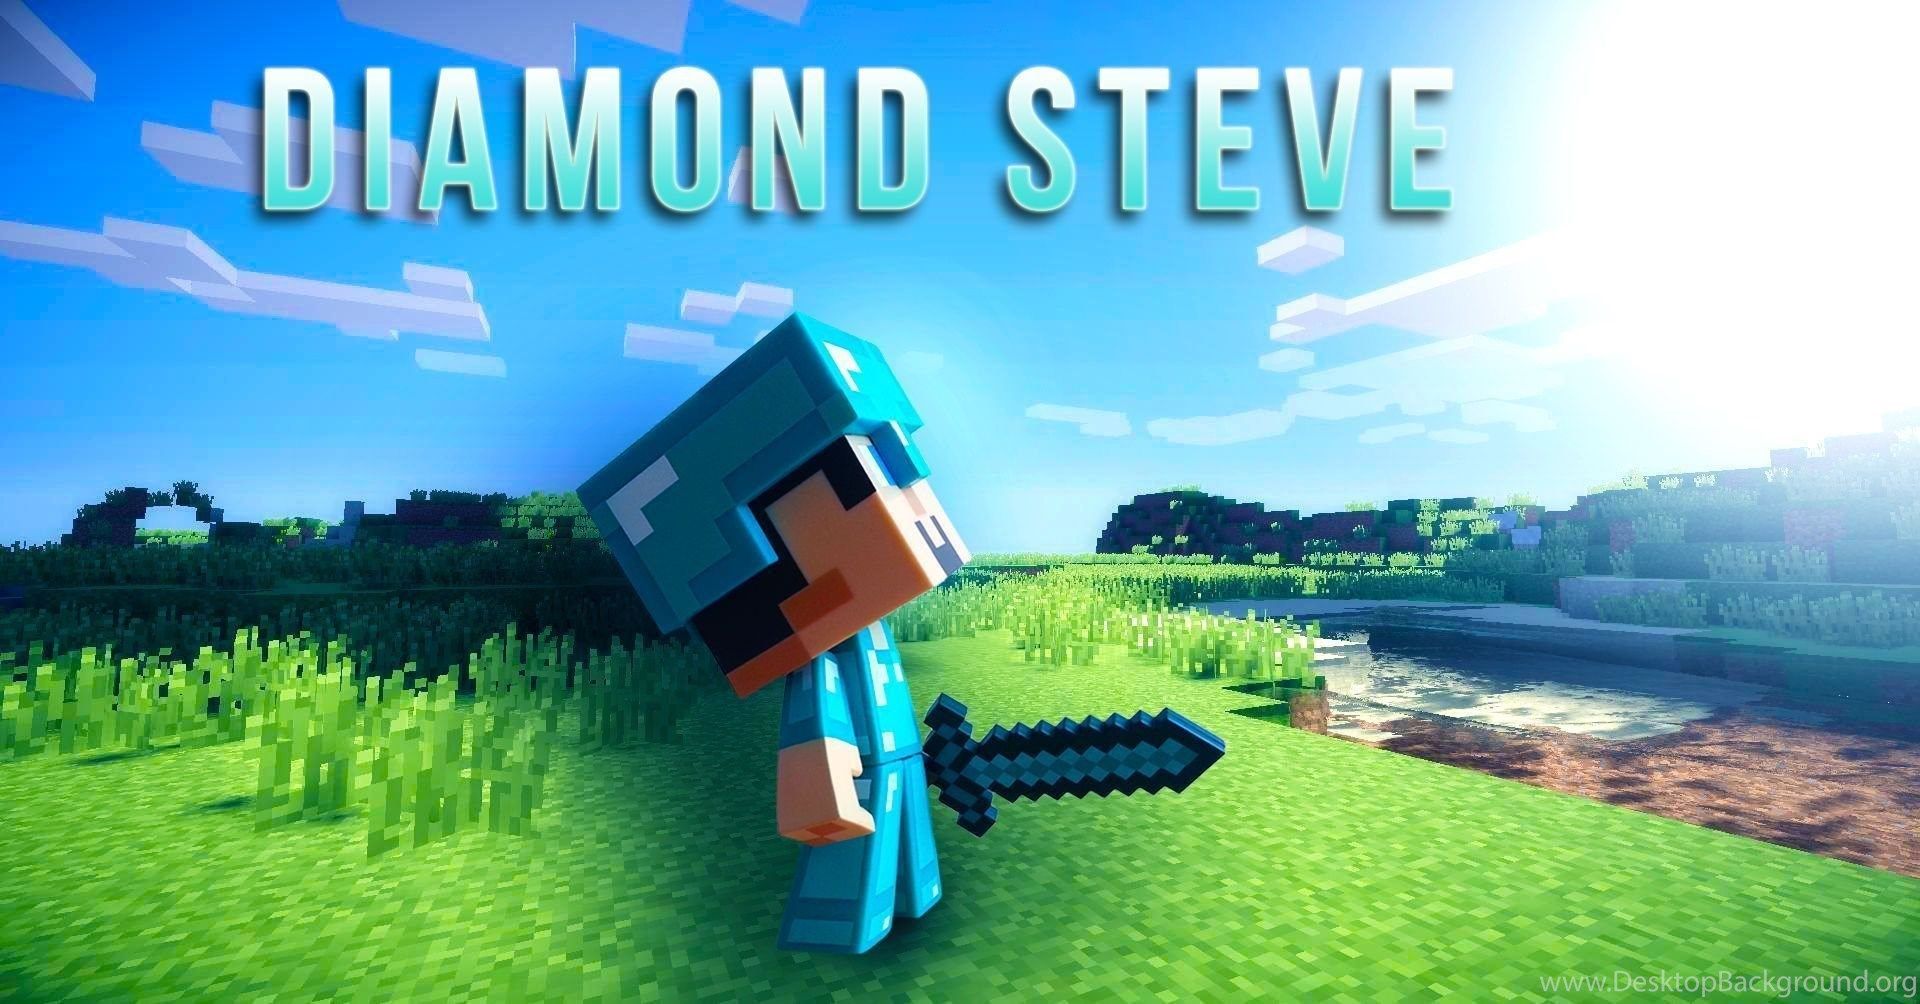 Minecraft Diamond Steve Wallpaper (text) By DeVaZzTor On